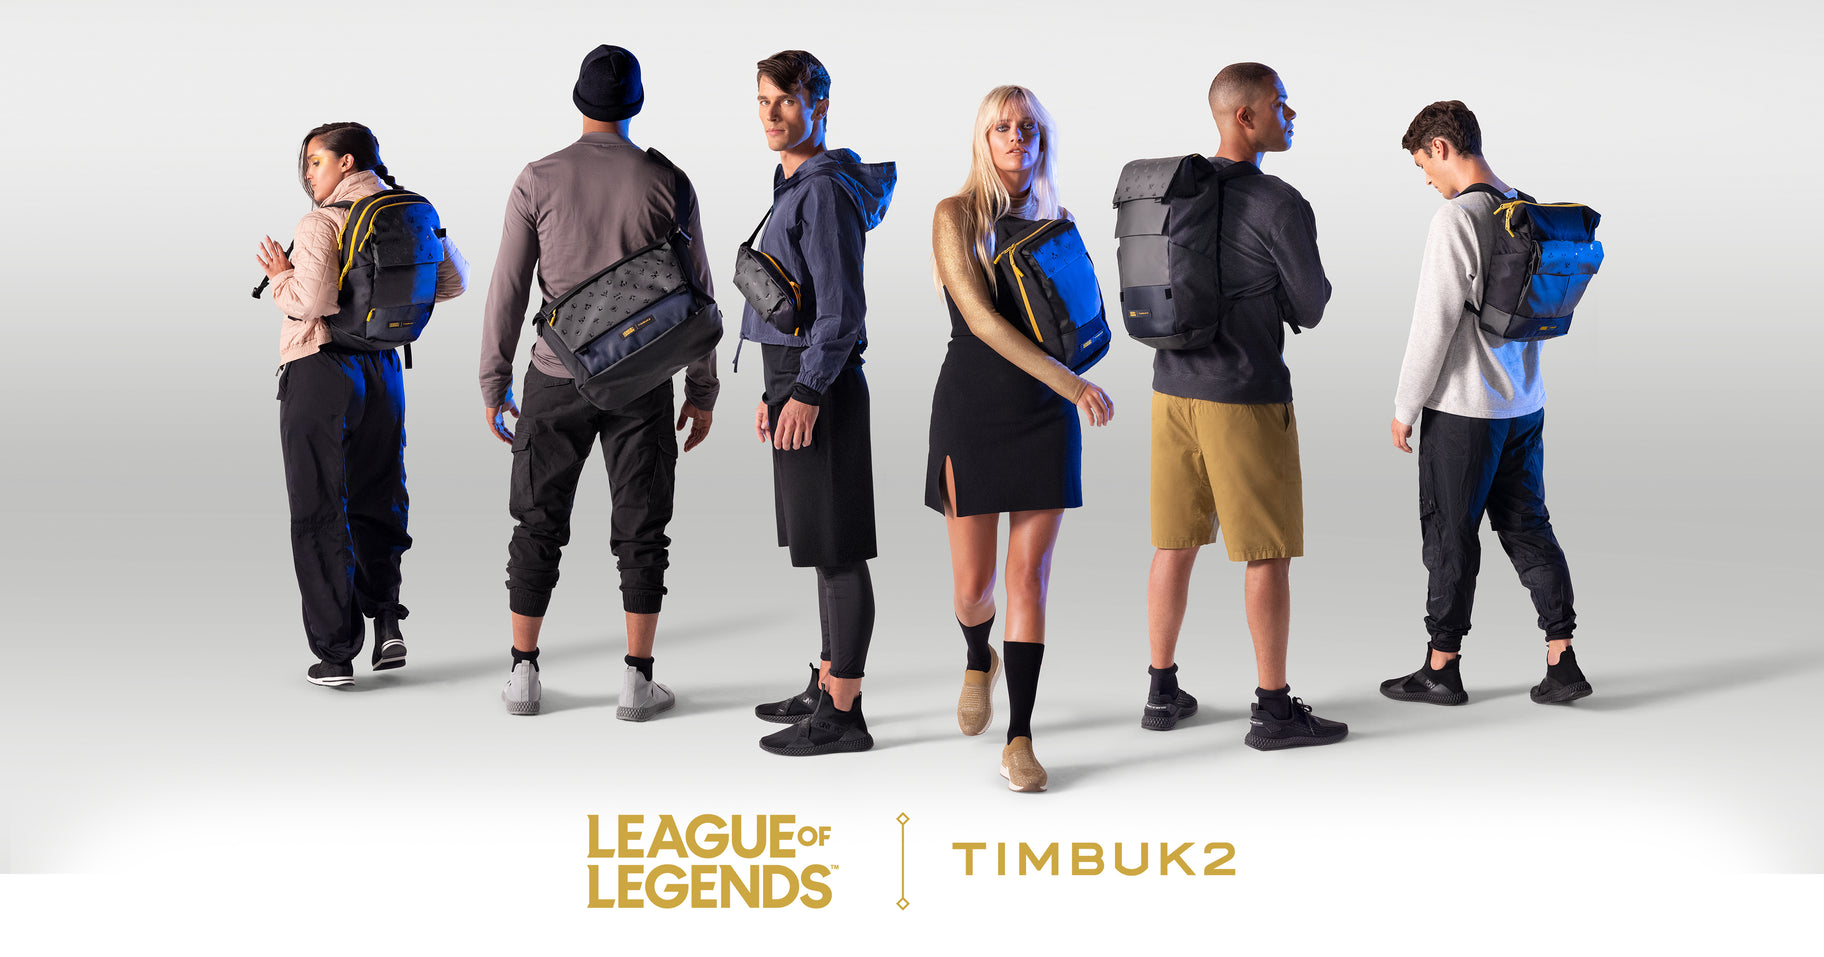 Timbuk2 x League of Legends Messenger Bag